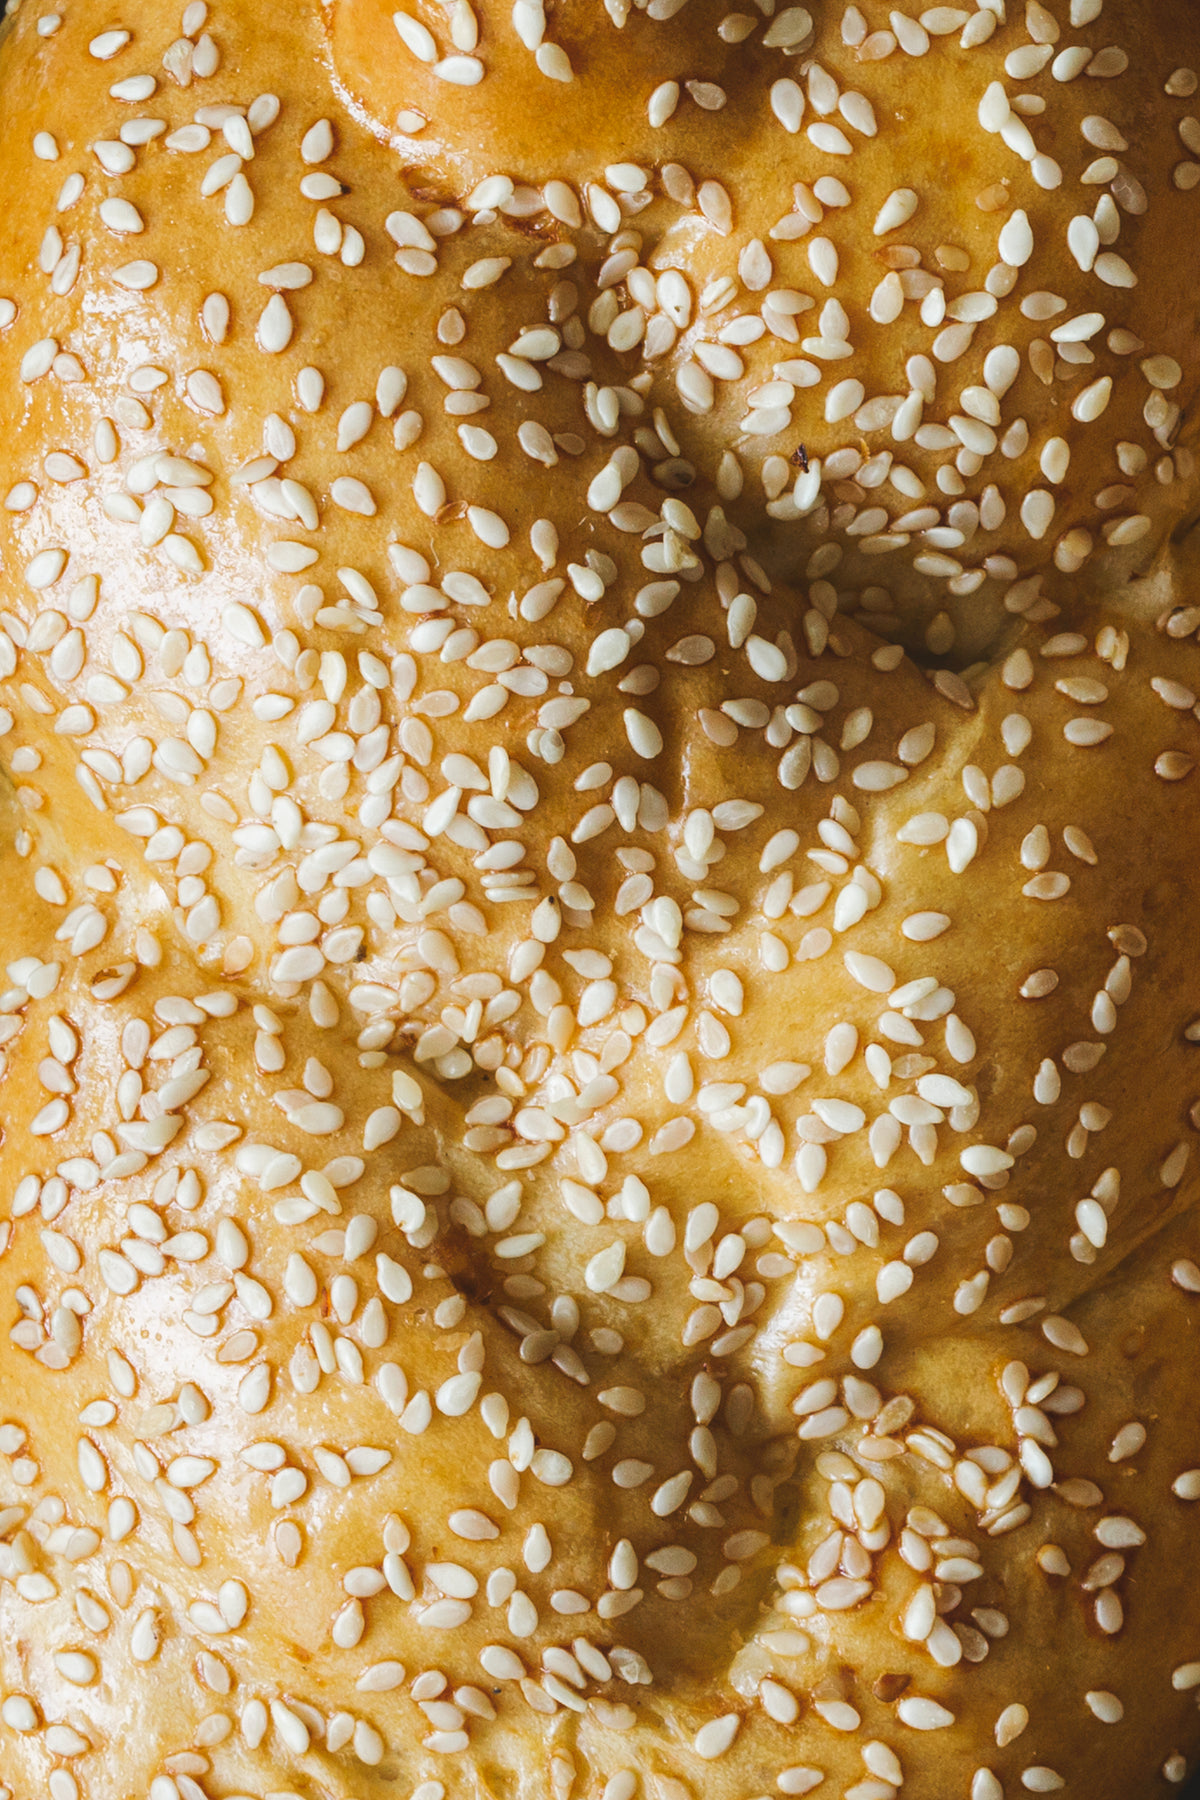 sesame seeds on challah bread texture